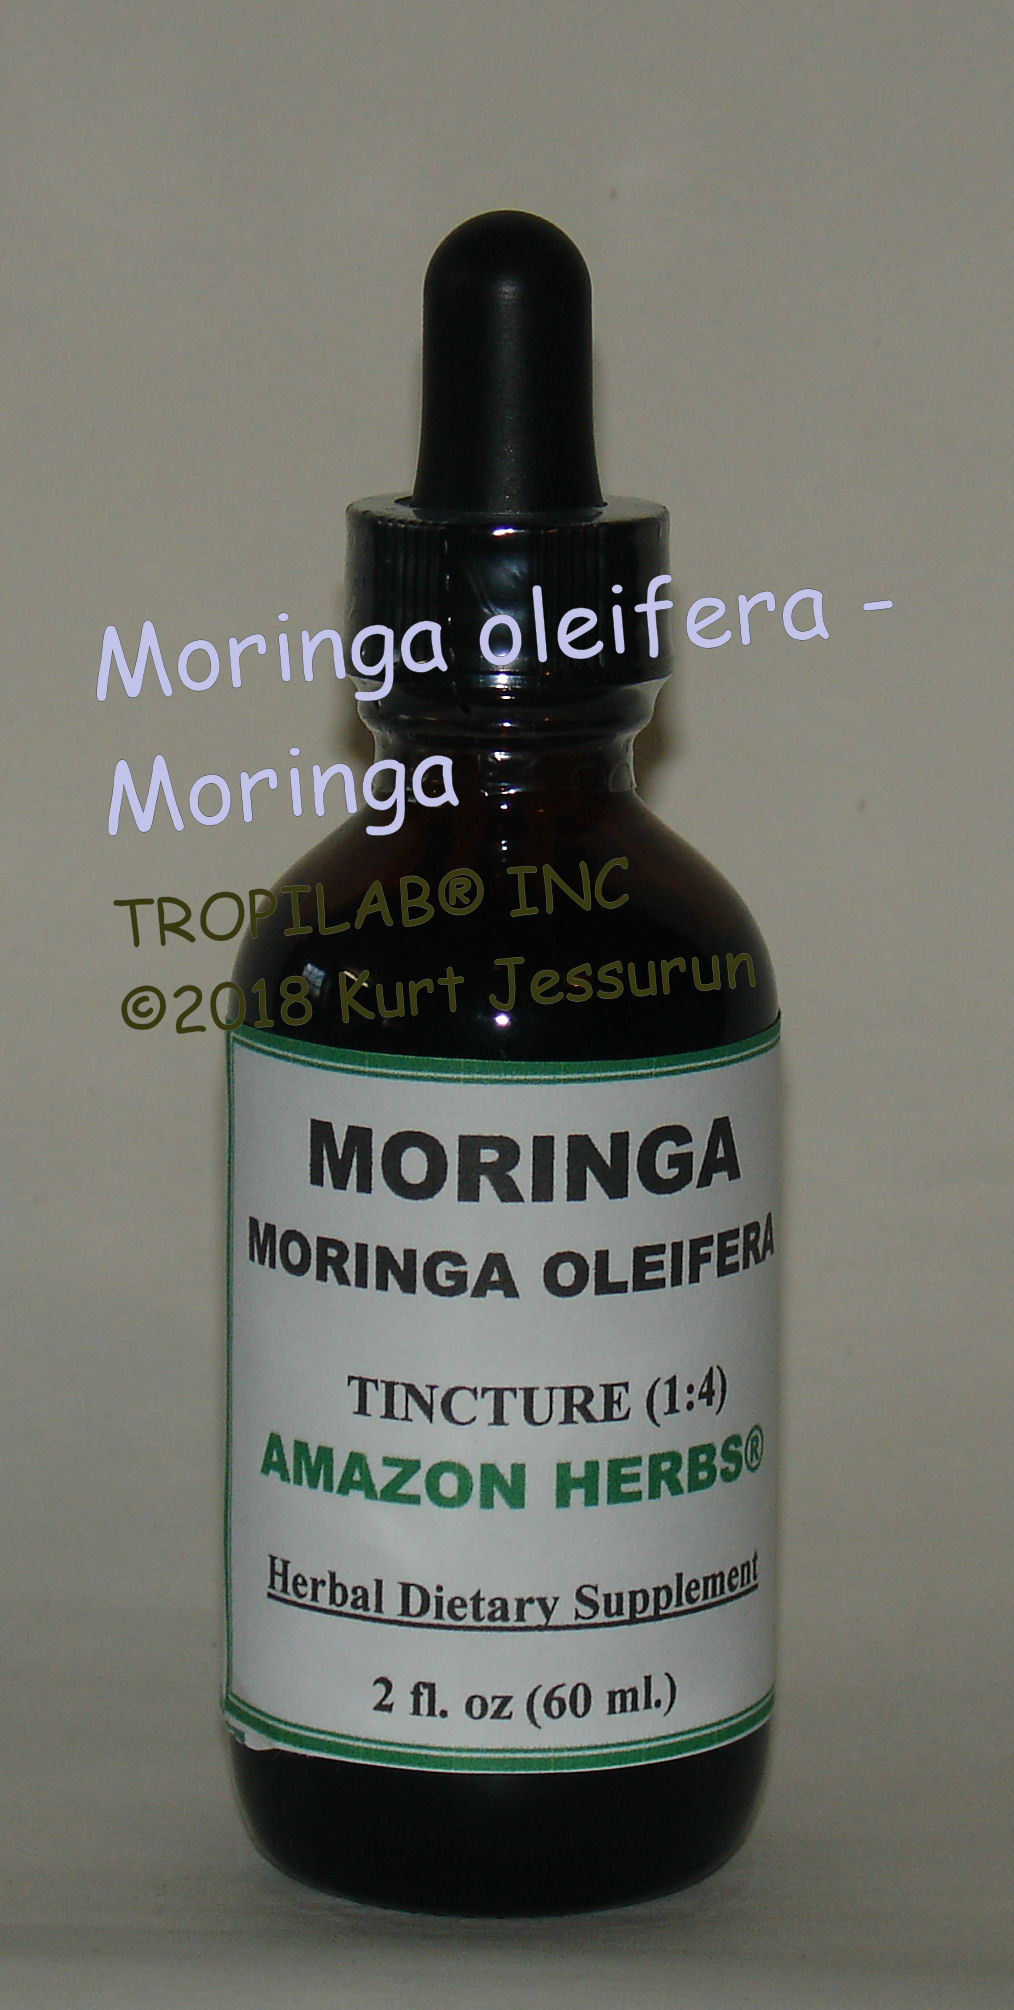 Moringa oleifera tincture - TROPILAB, many medicinal applications such as 
anti-inflammatory, anticancer, antiviral, anticonvulsant, antileishmanial and antispasmodic